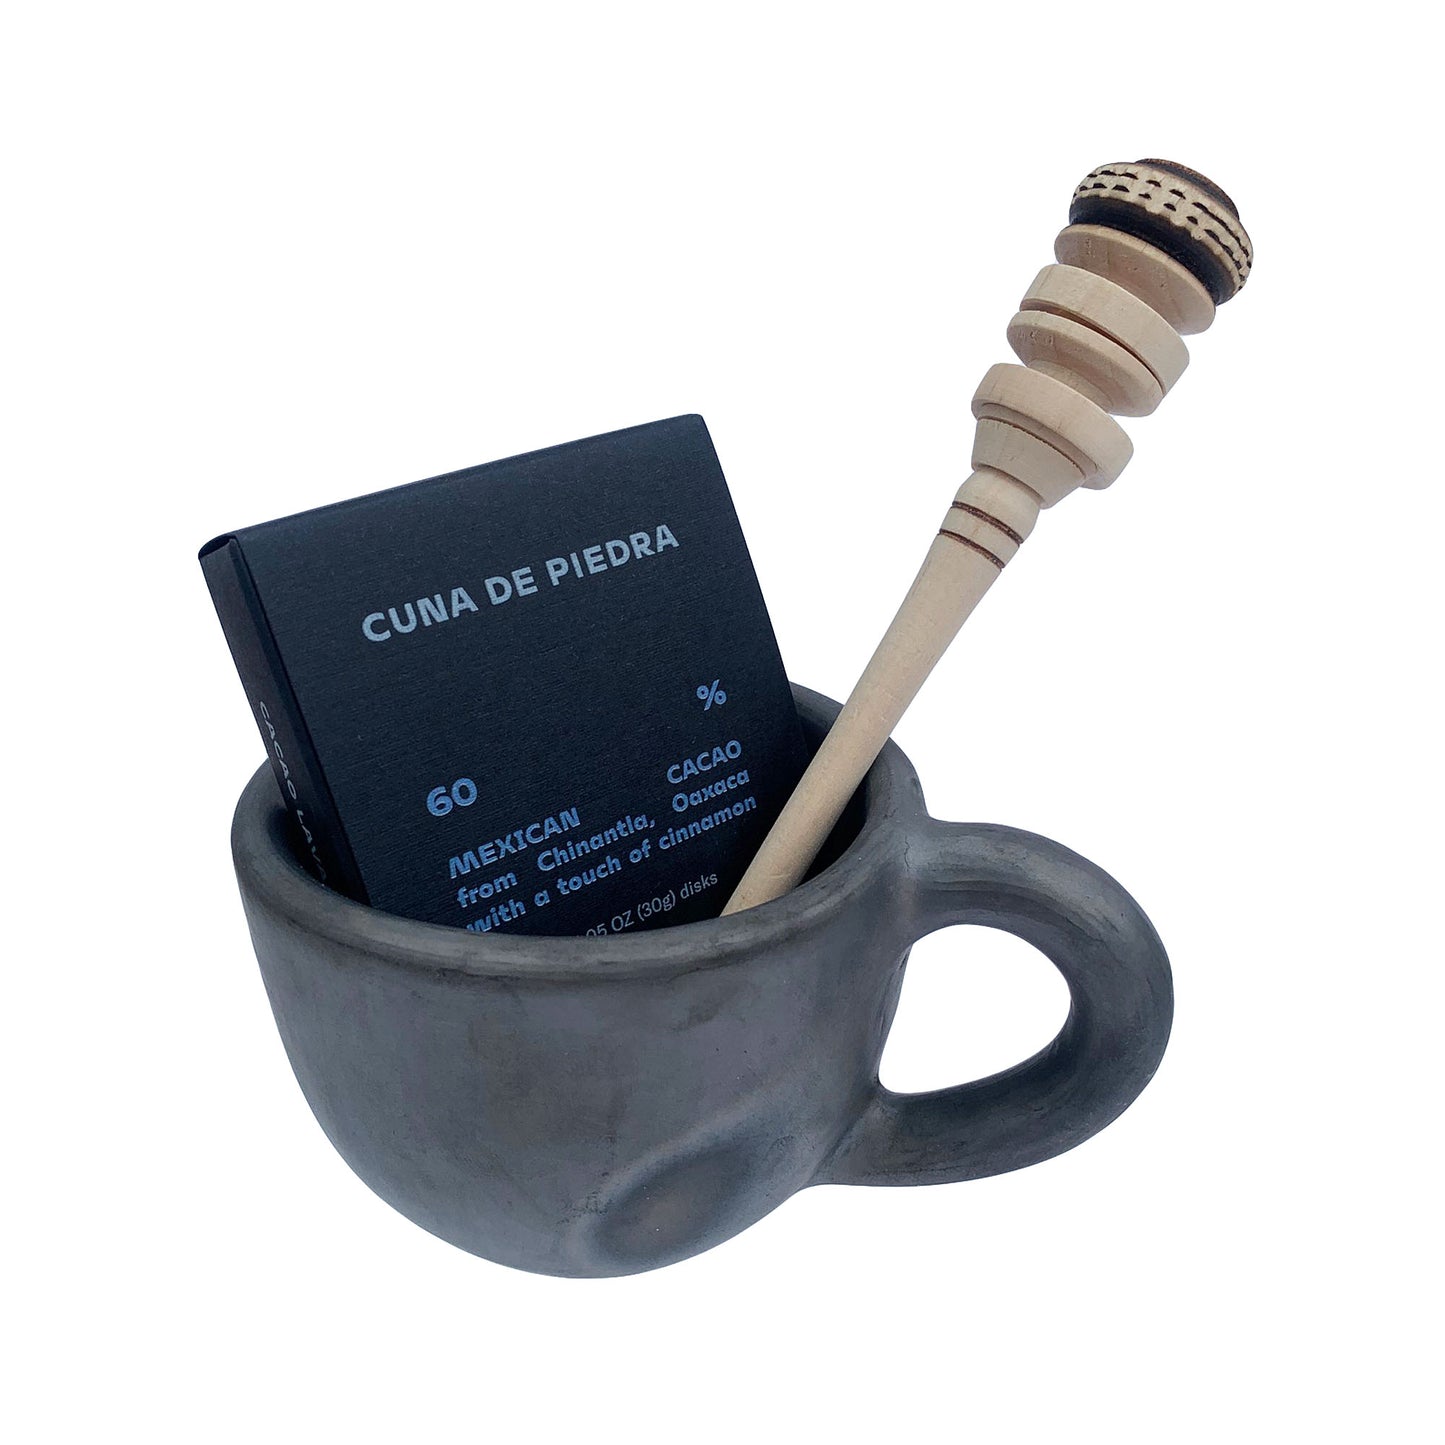 Mexican Hot Chocolate Gift Set wtih Black Clay Mug, Mini Molinillo and Drinking Chocolate Disks